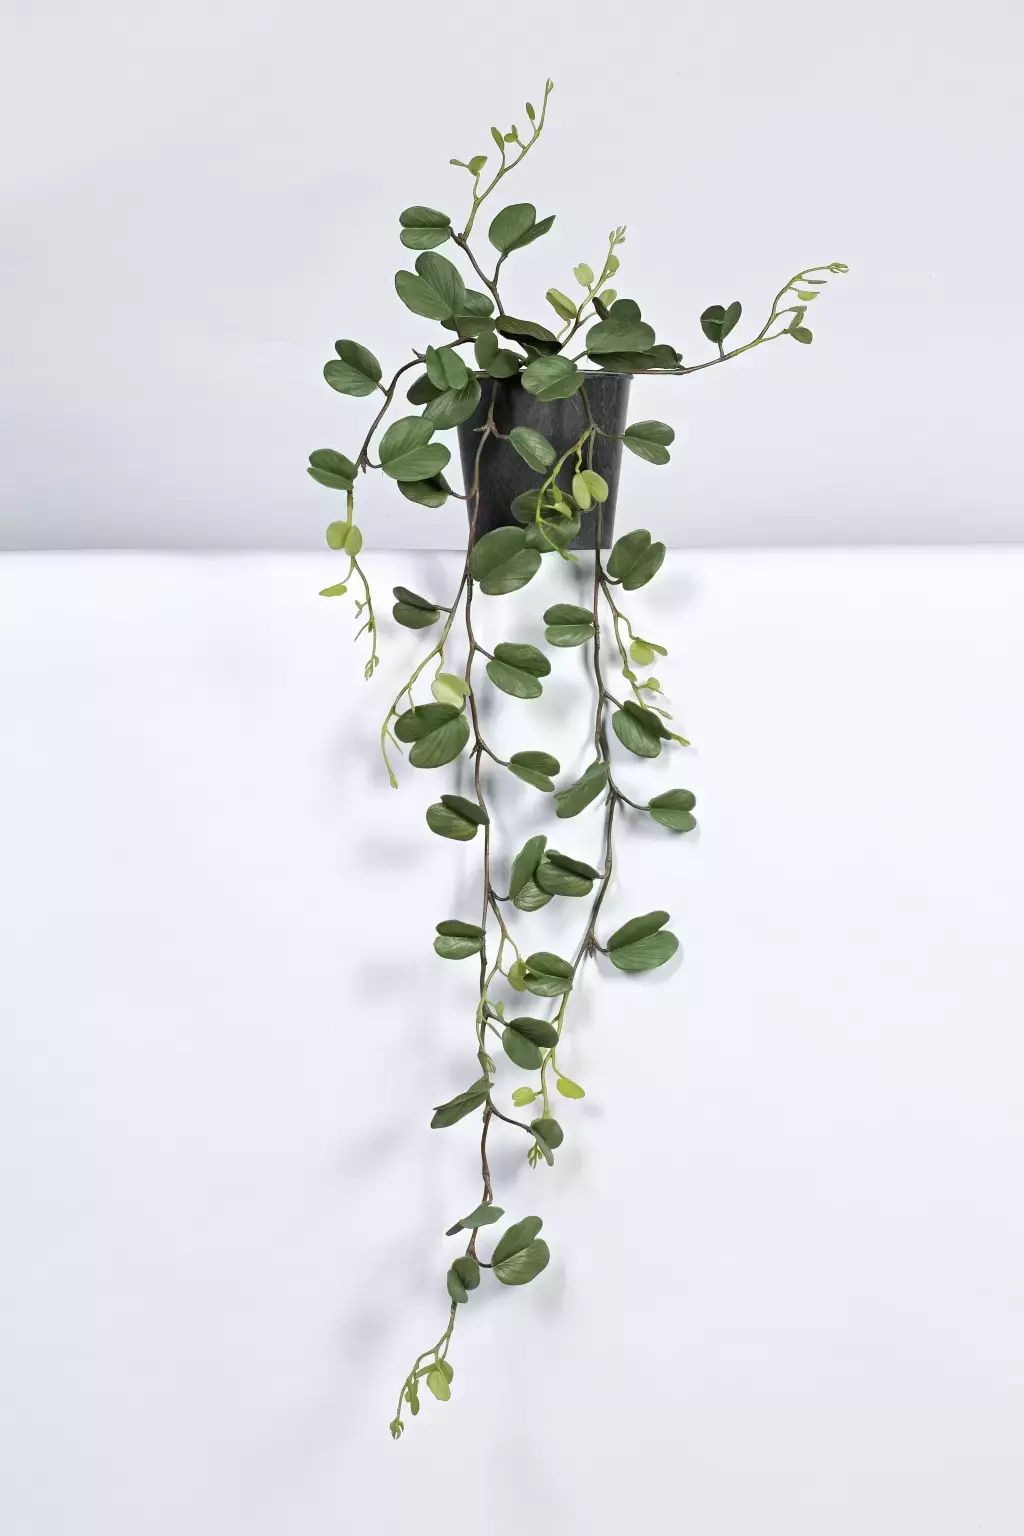 Kunsthangplant Hoya kerii in pot